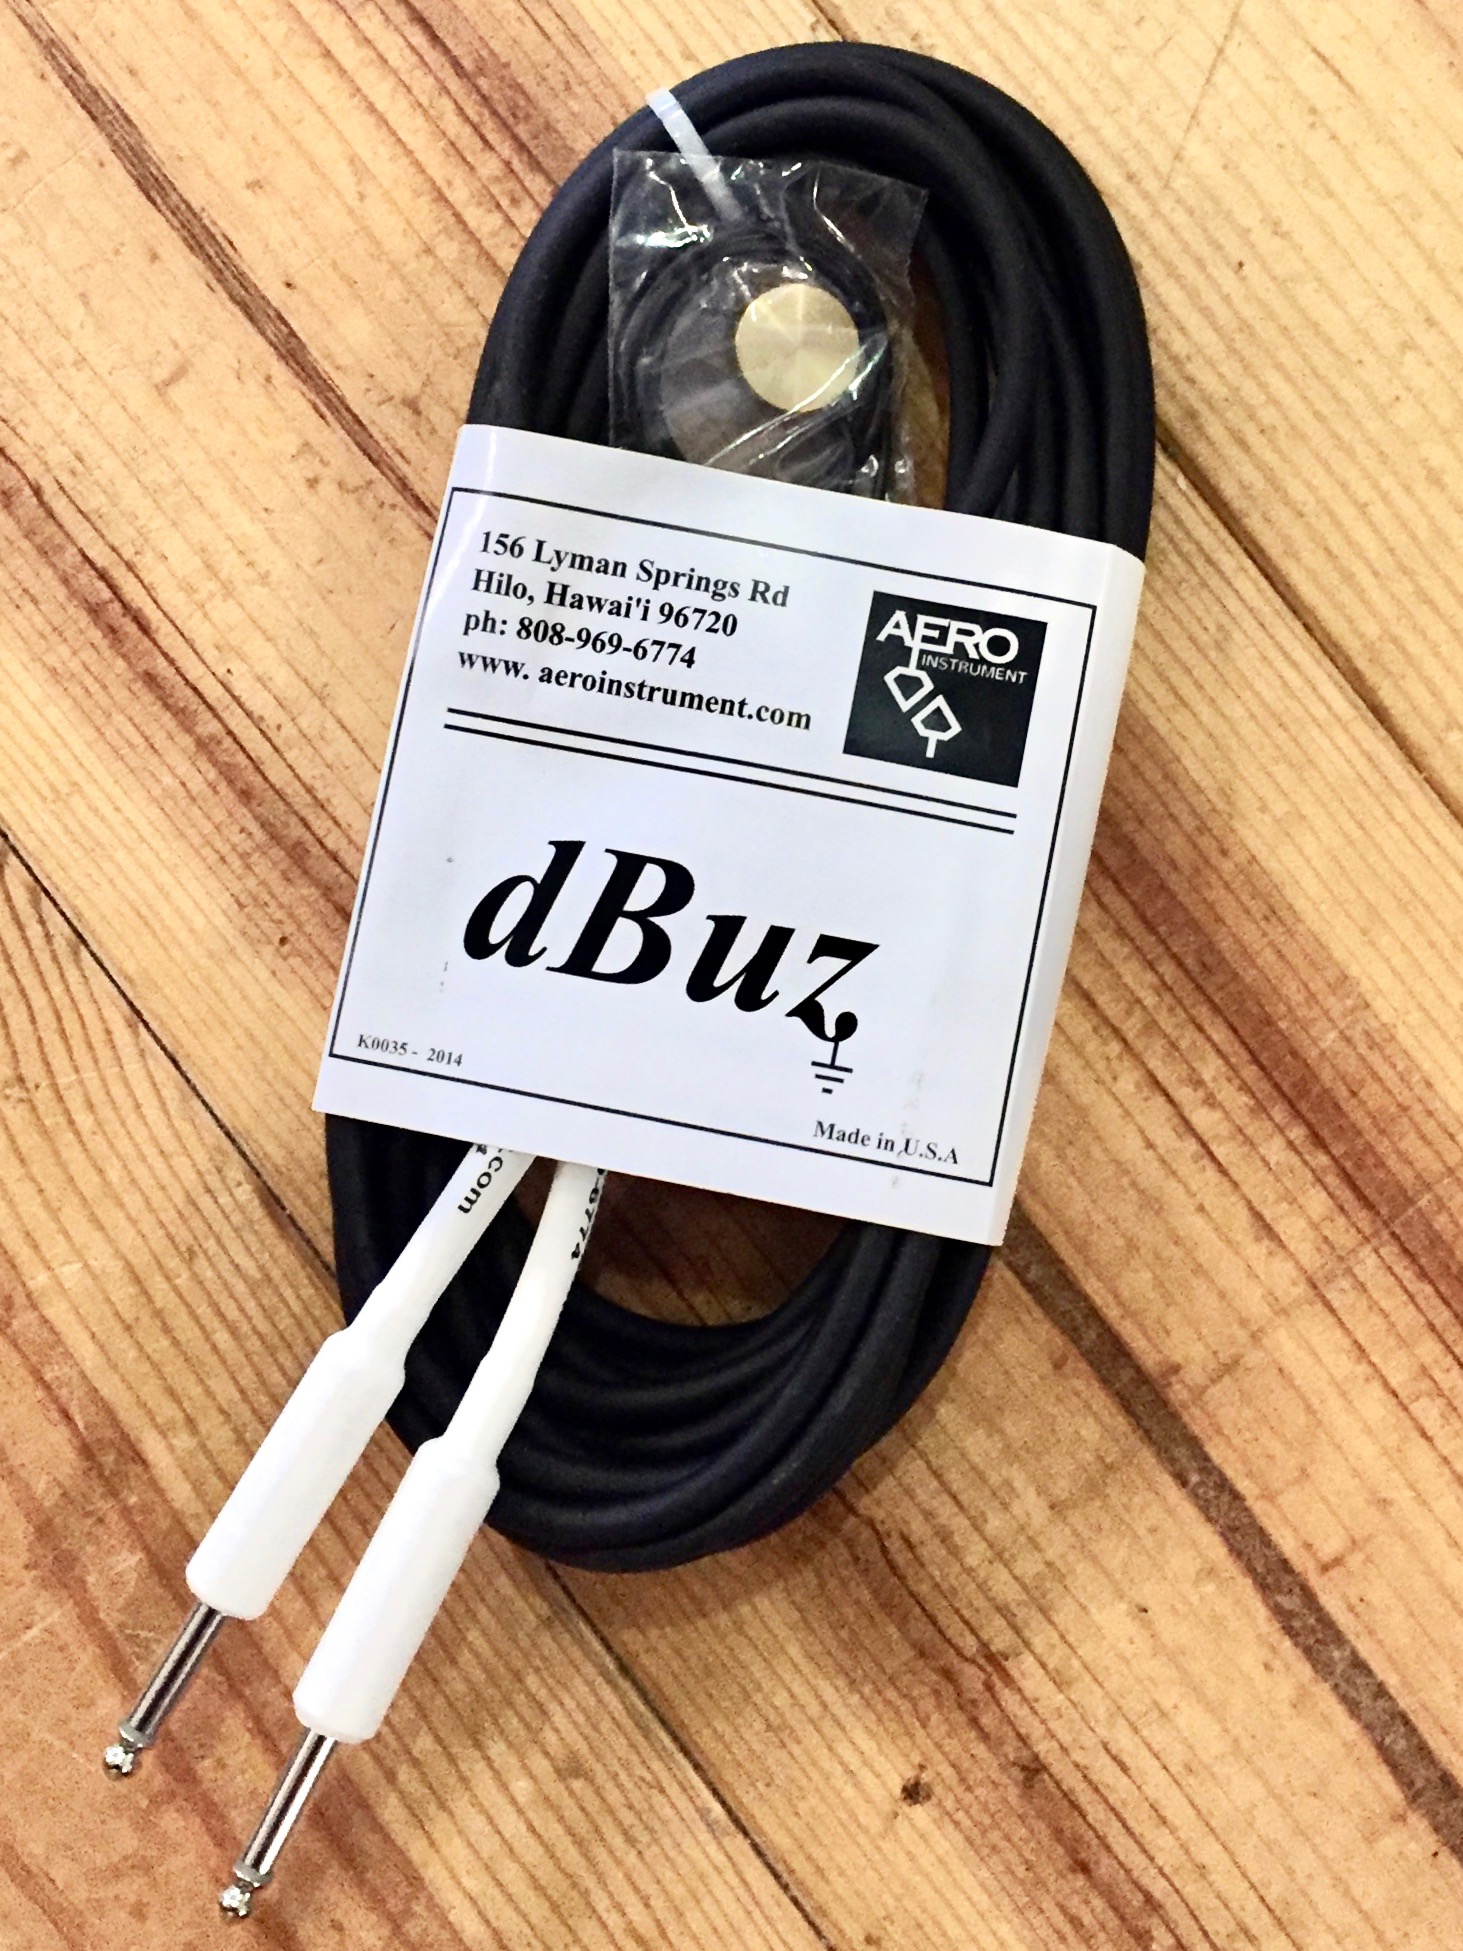 Aero - dBuz Cable